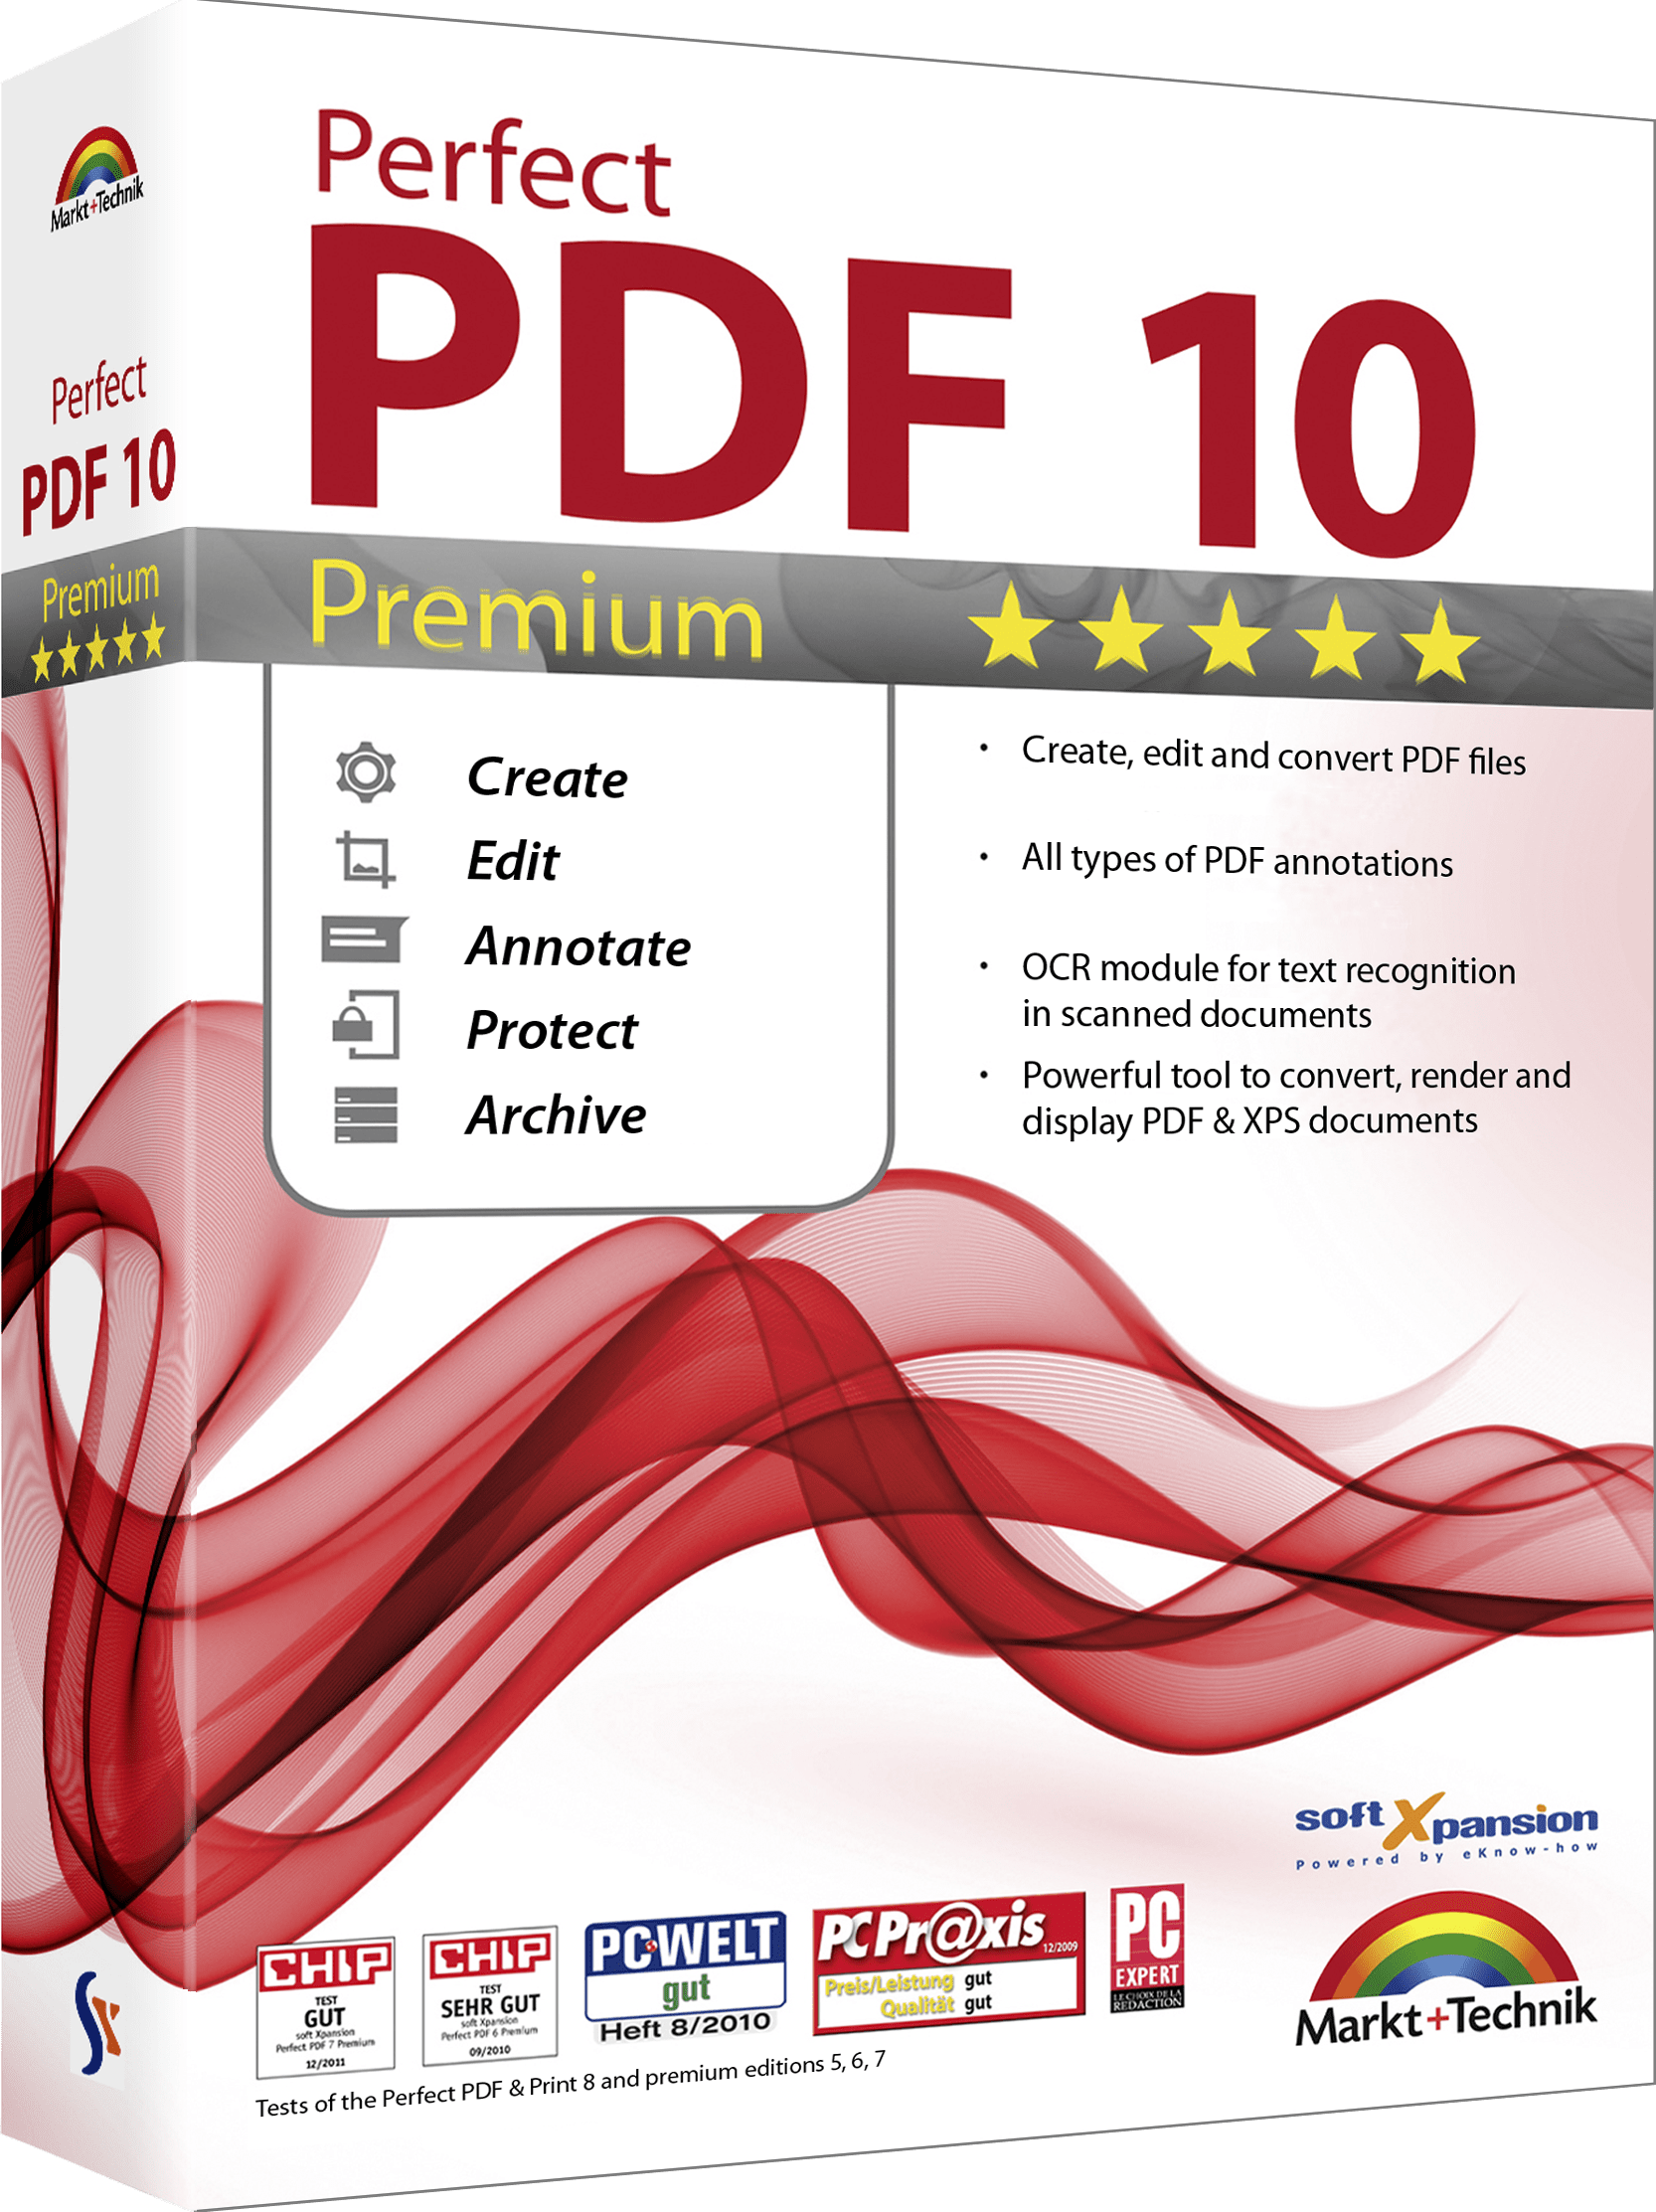 Perfect pdf 10 premium download gujarati song mp3 free download